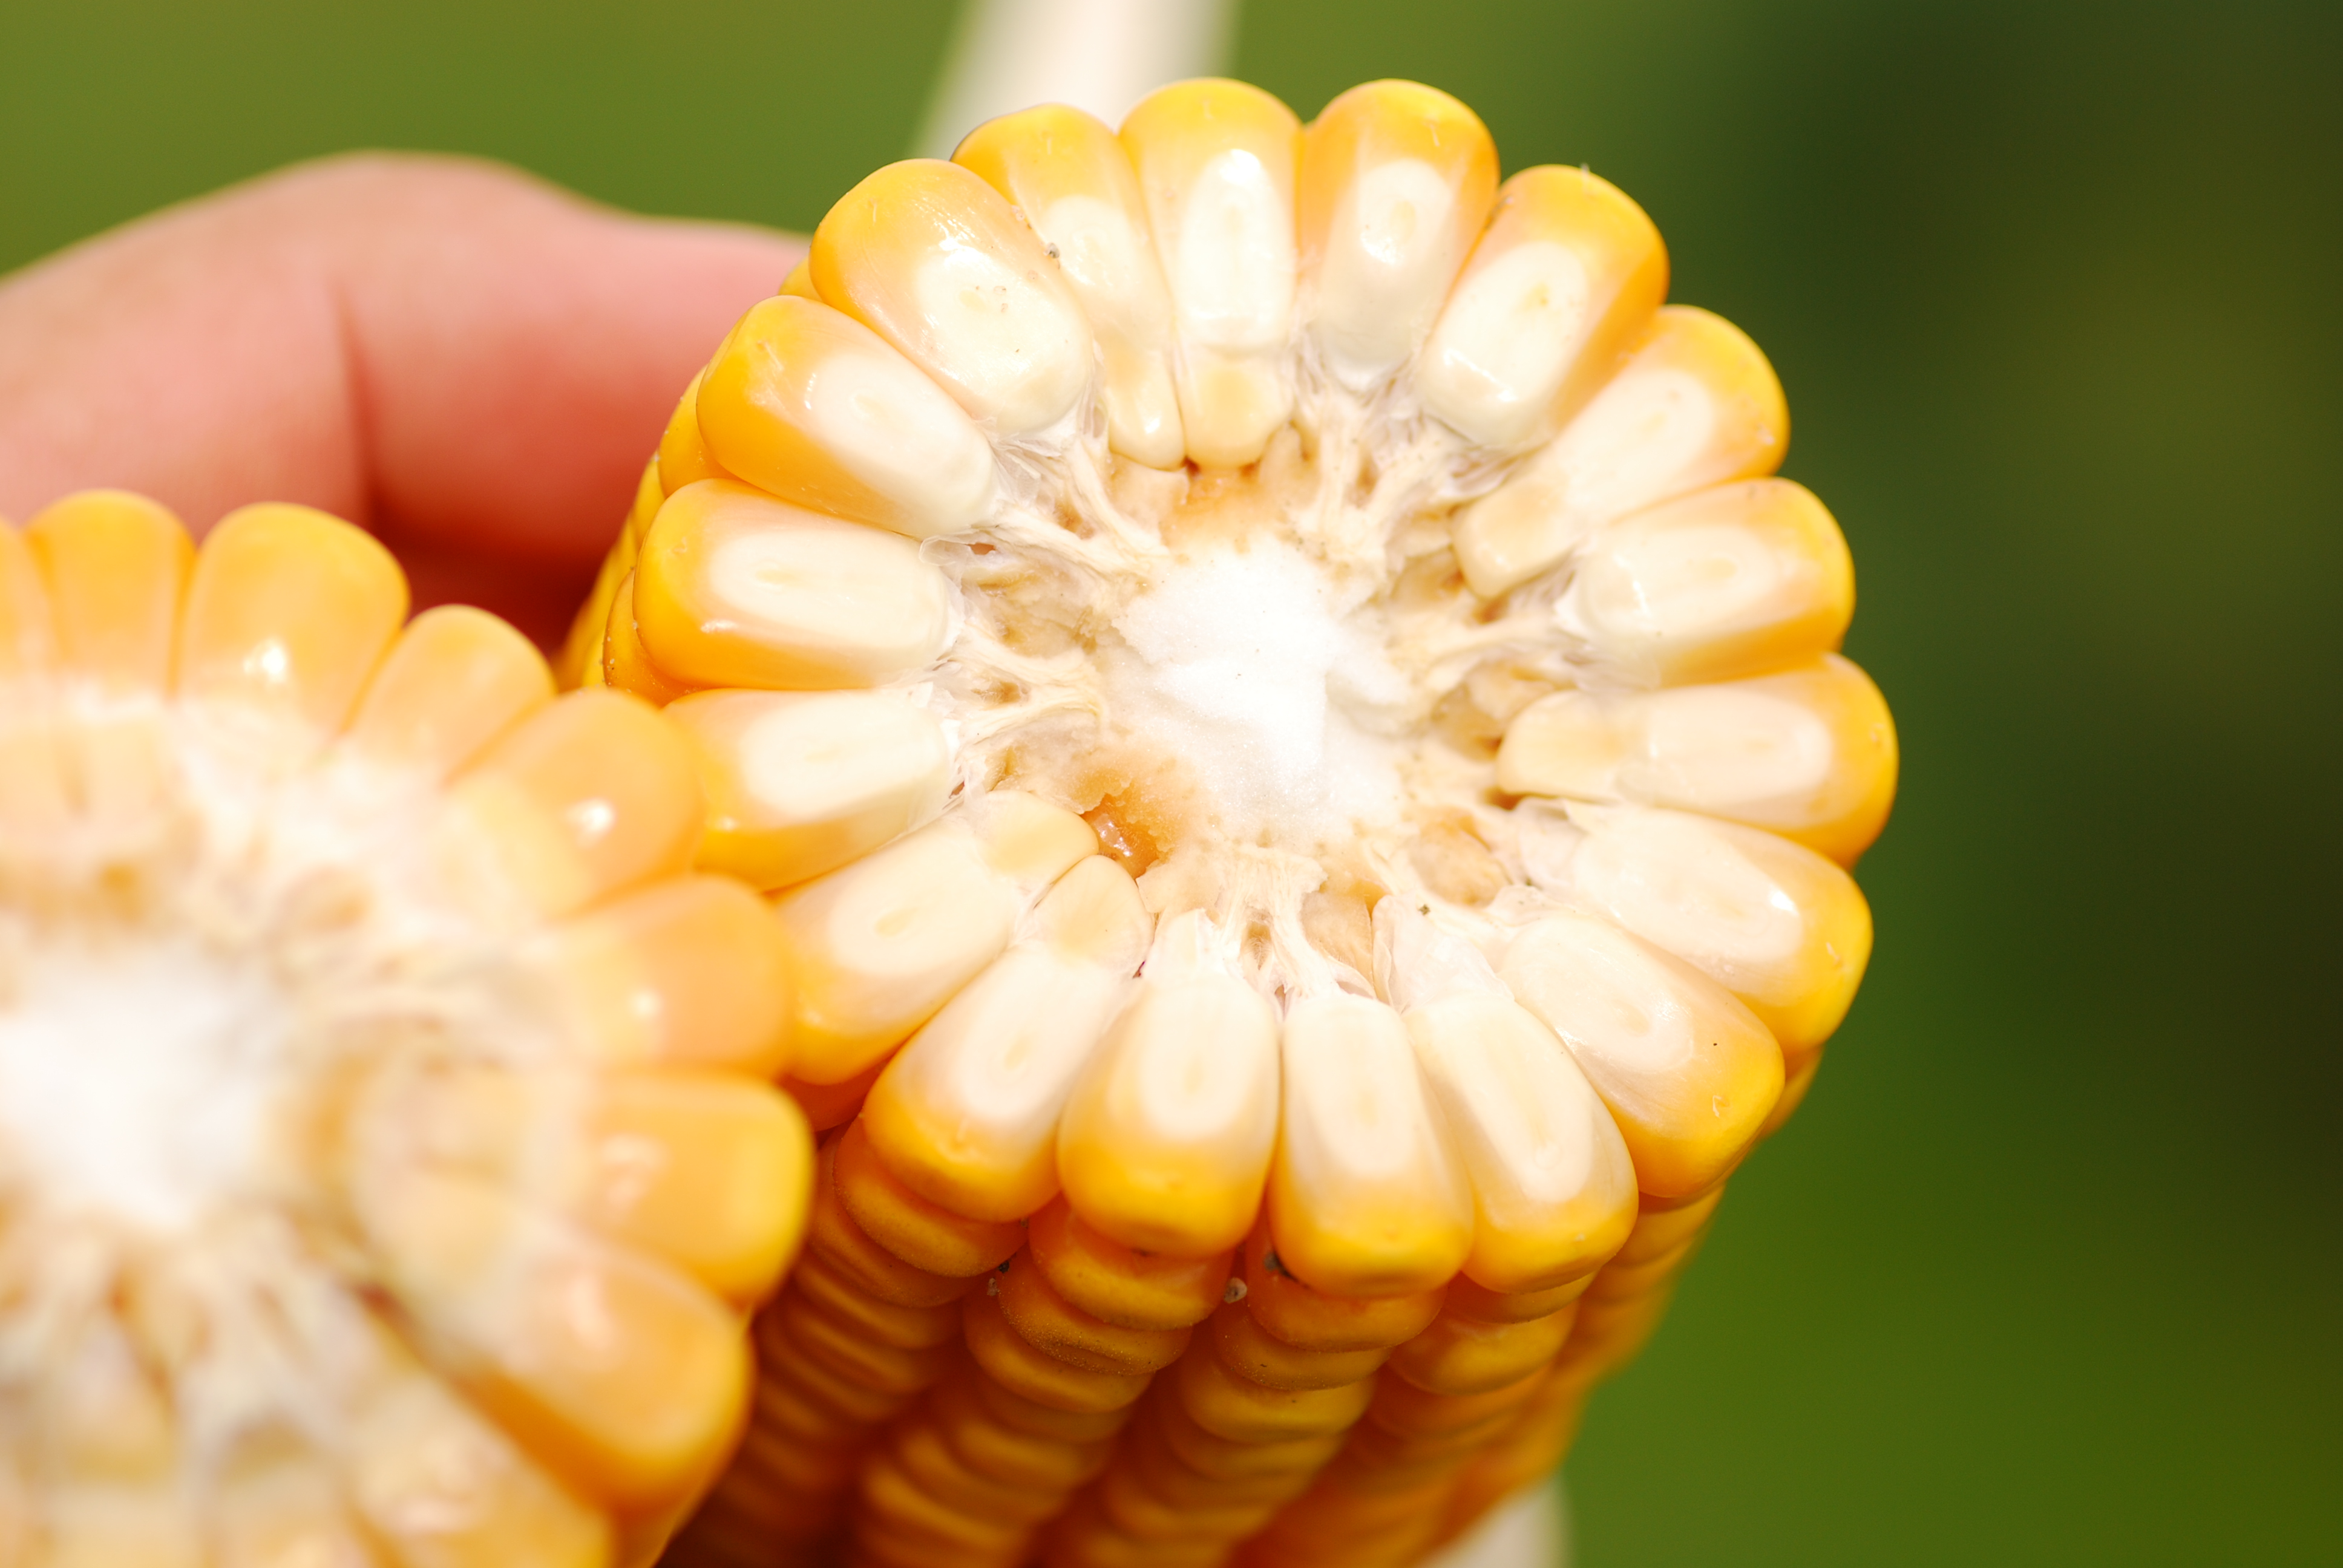 corn seeds, corn products, corn